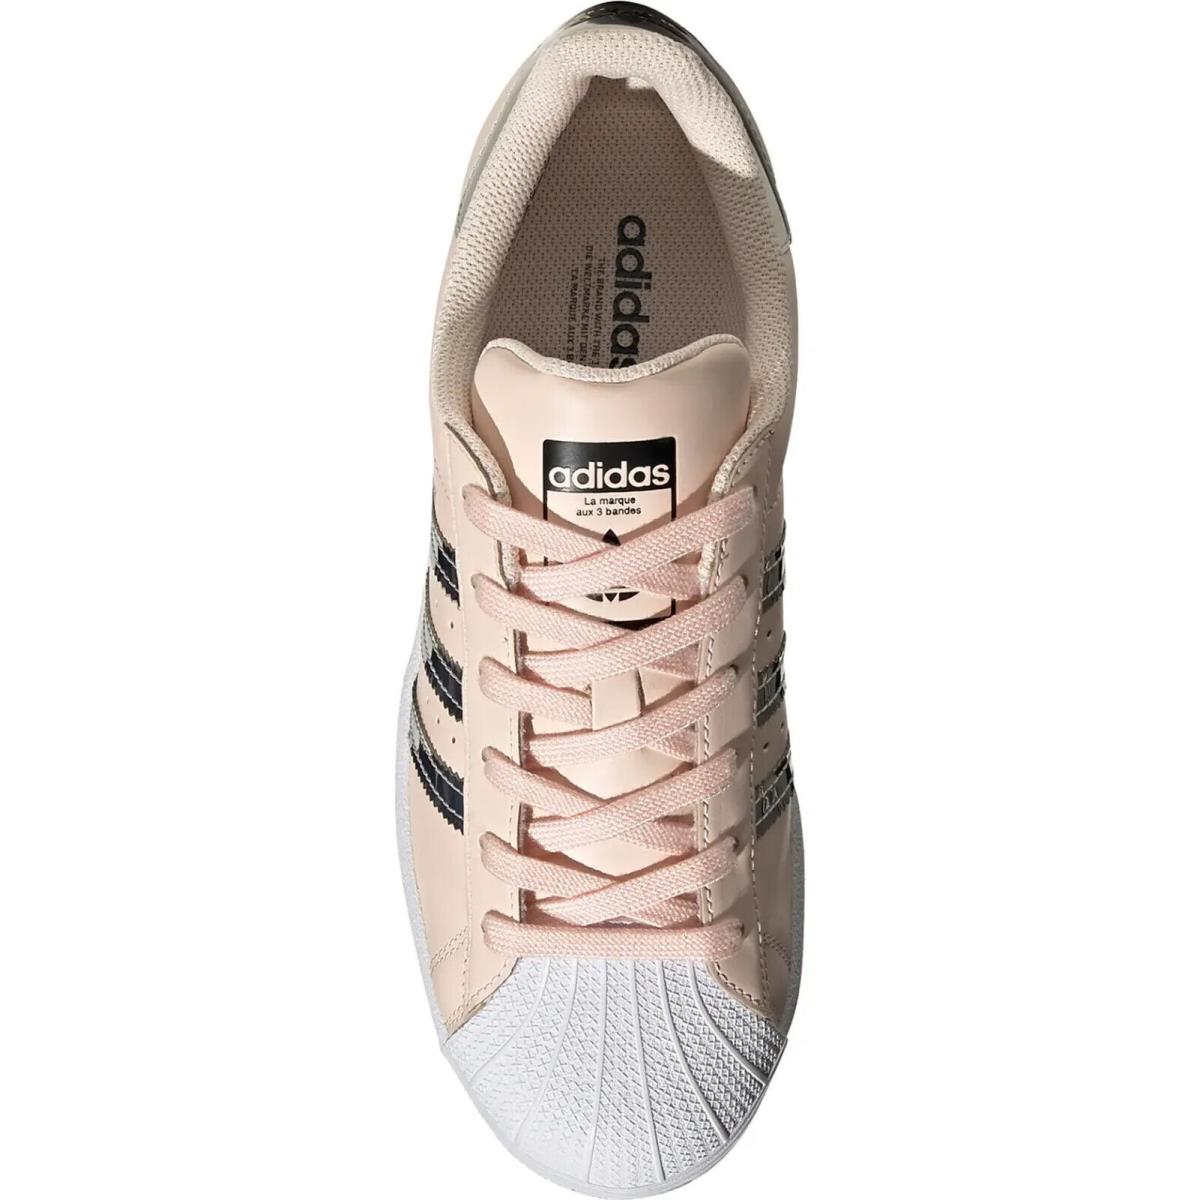 Adidas shoes Superstar - Pink 2